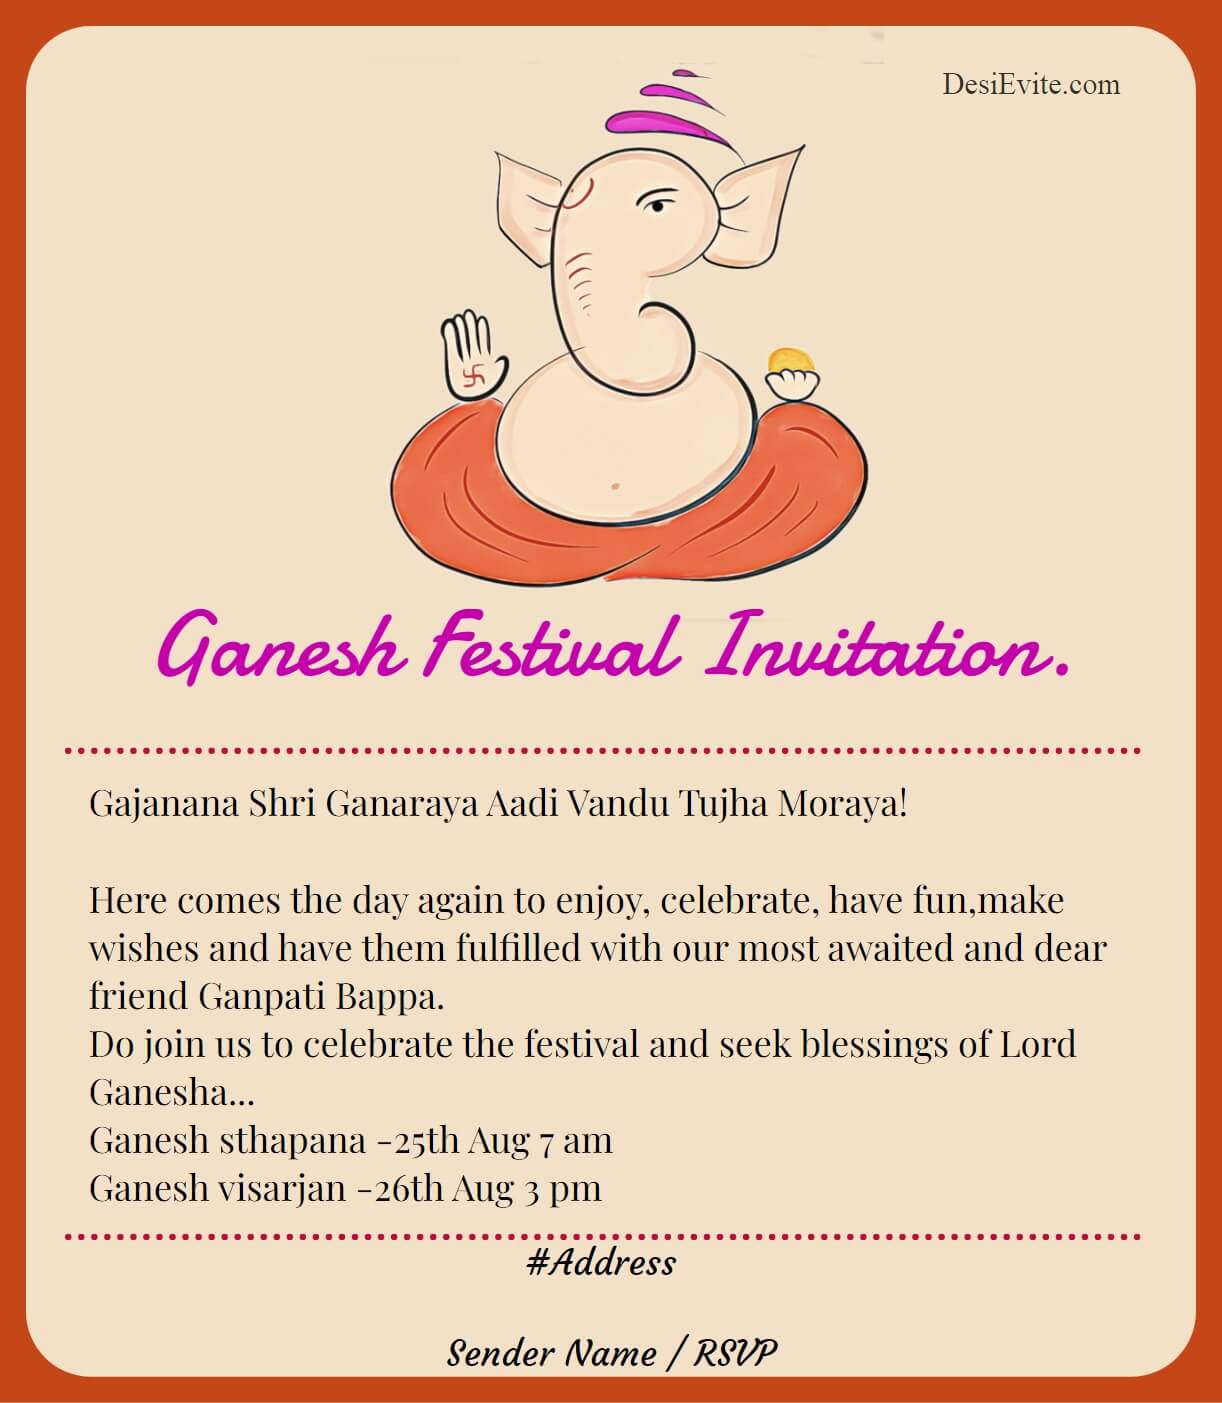 Ganesh Festival ecard template online   